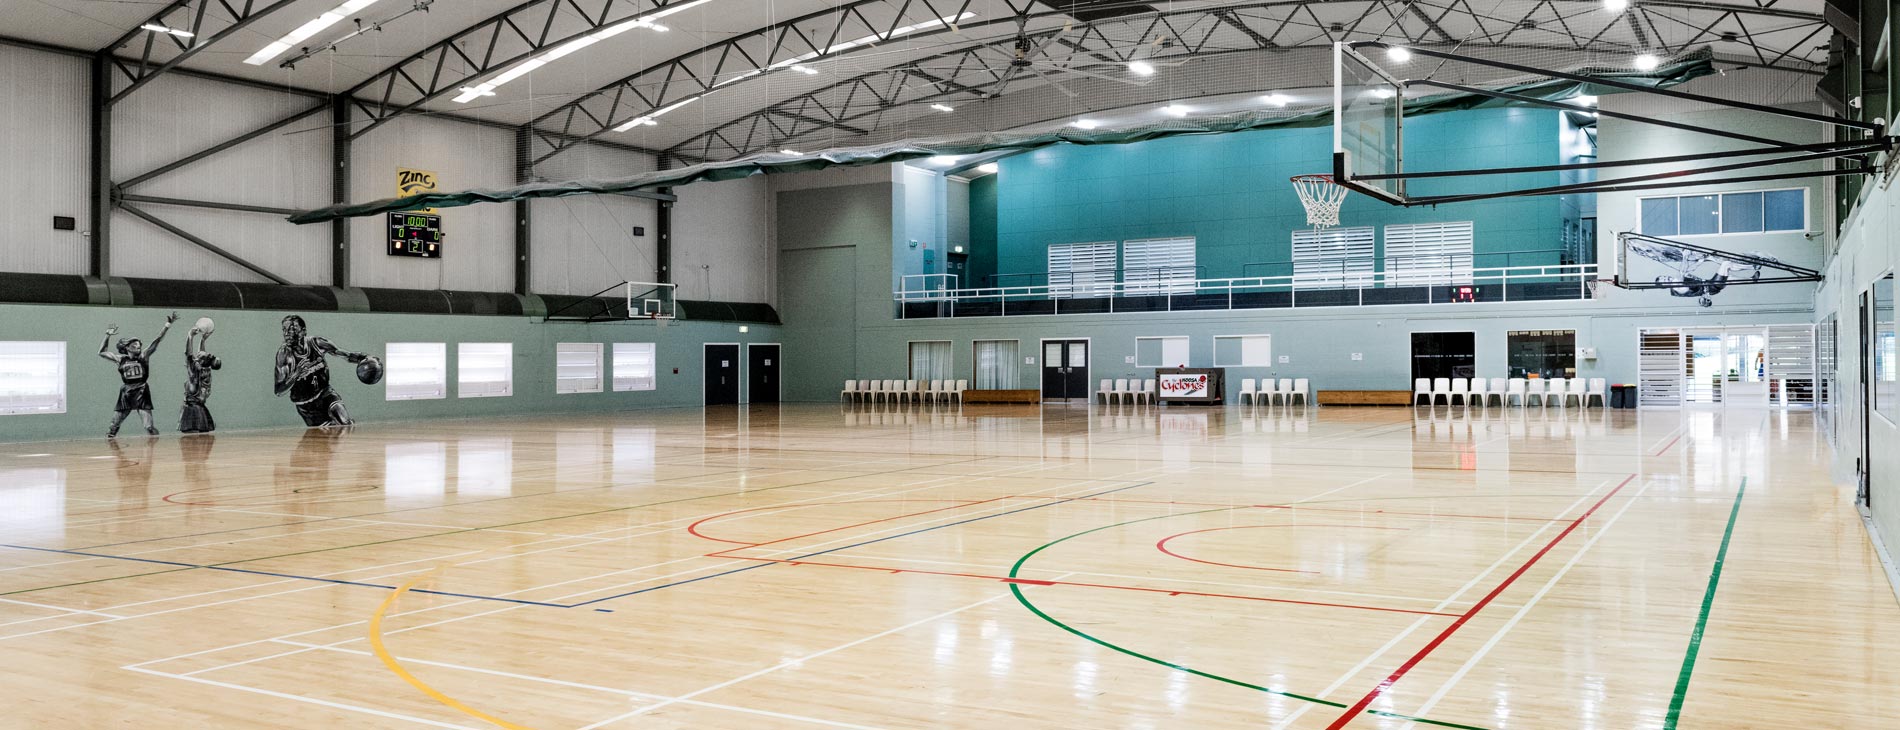 Noosa Basketball Court Hire